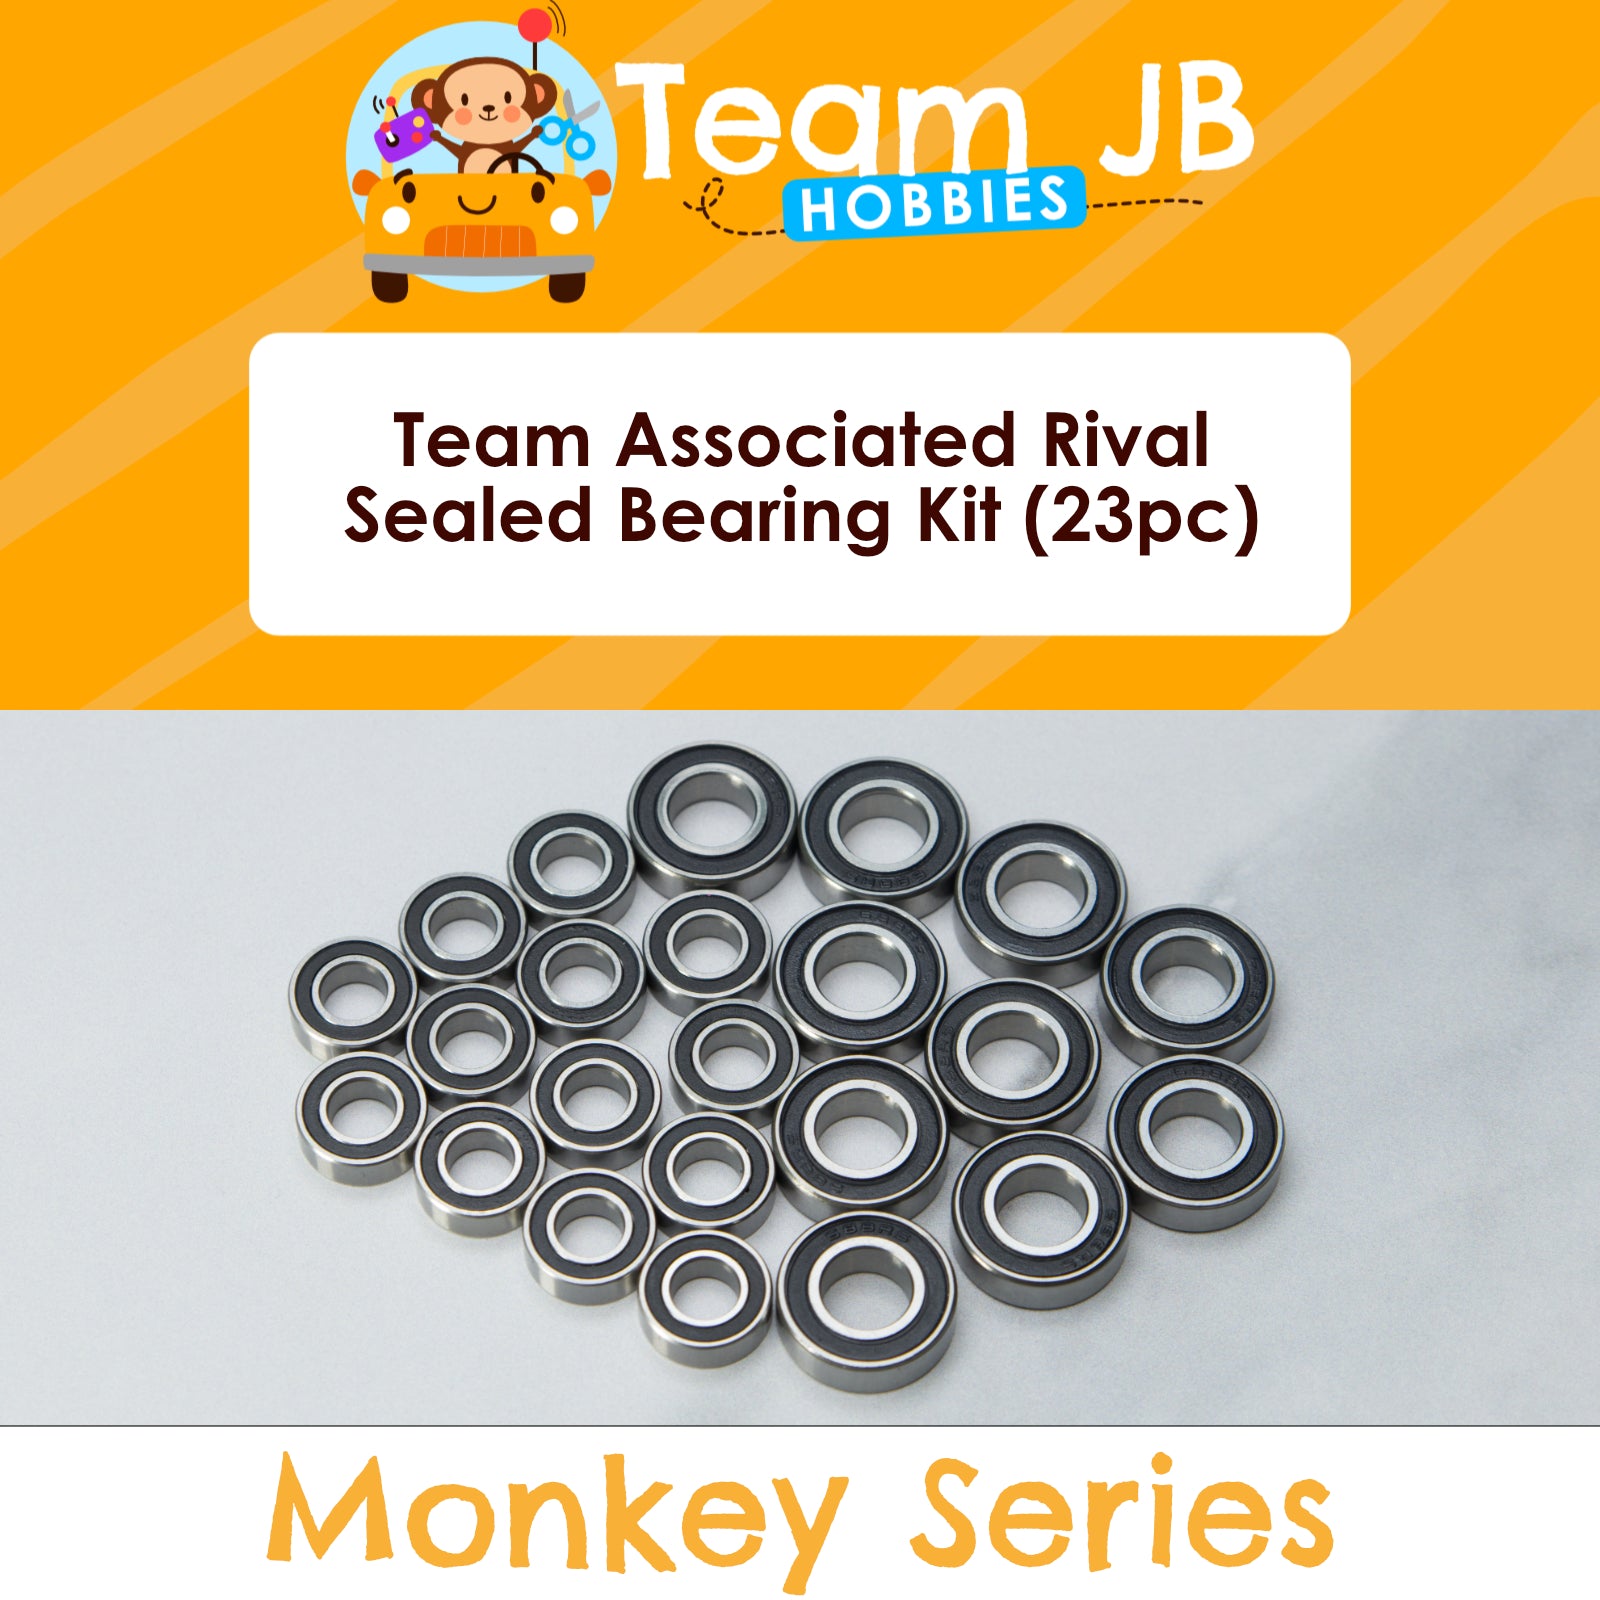 Team Associated Rival - Sealed Bearing Kit